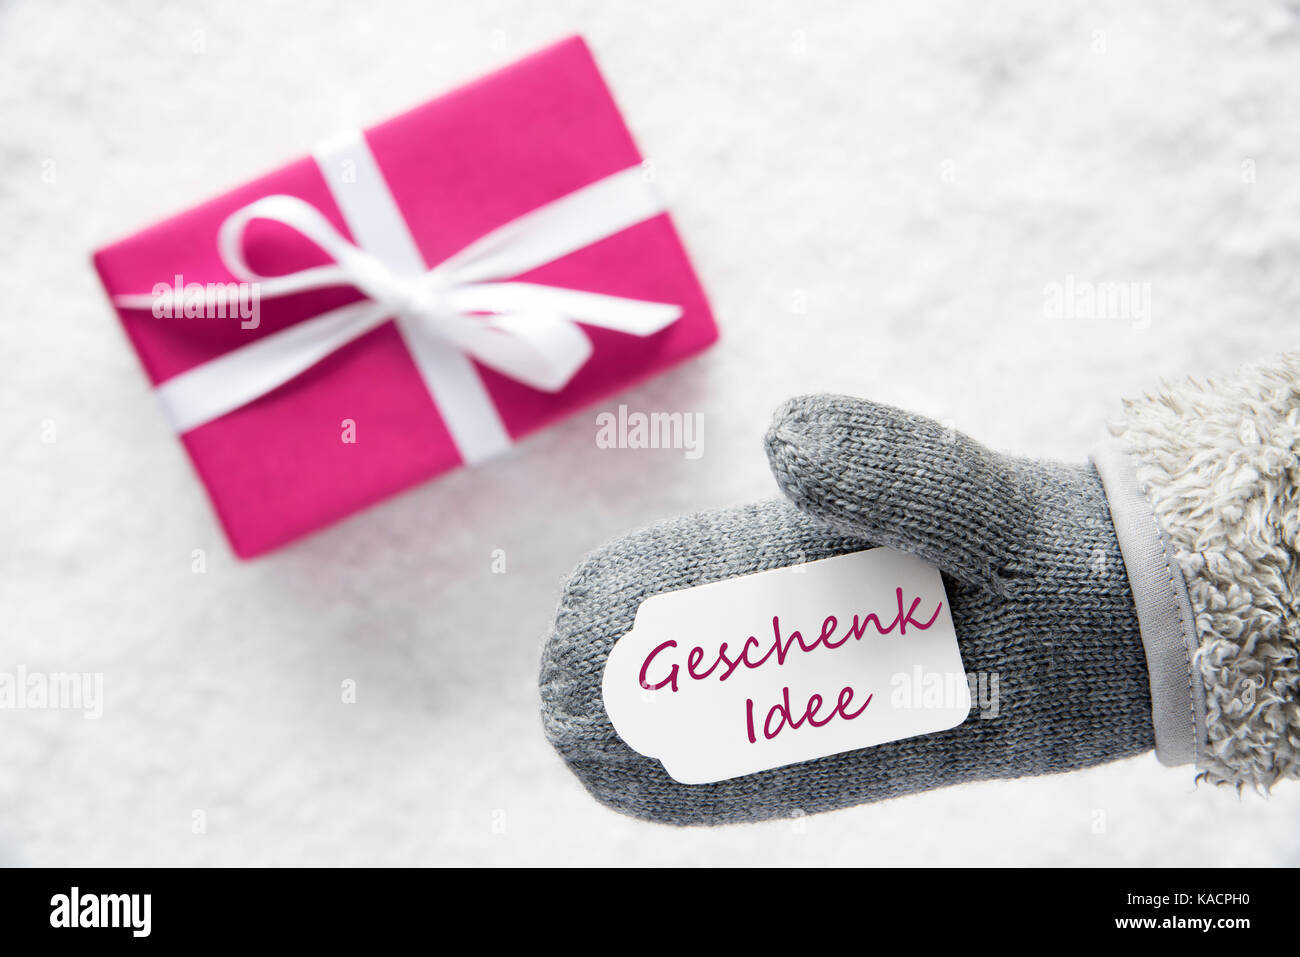 Pink Gift, Glove, Geschenk Idee Means Gift Idea Stock Photo